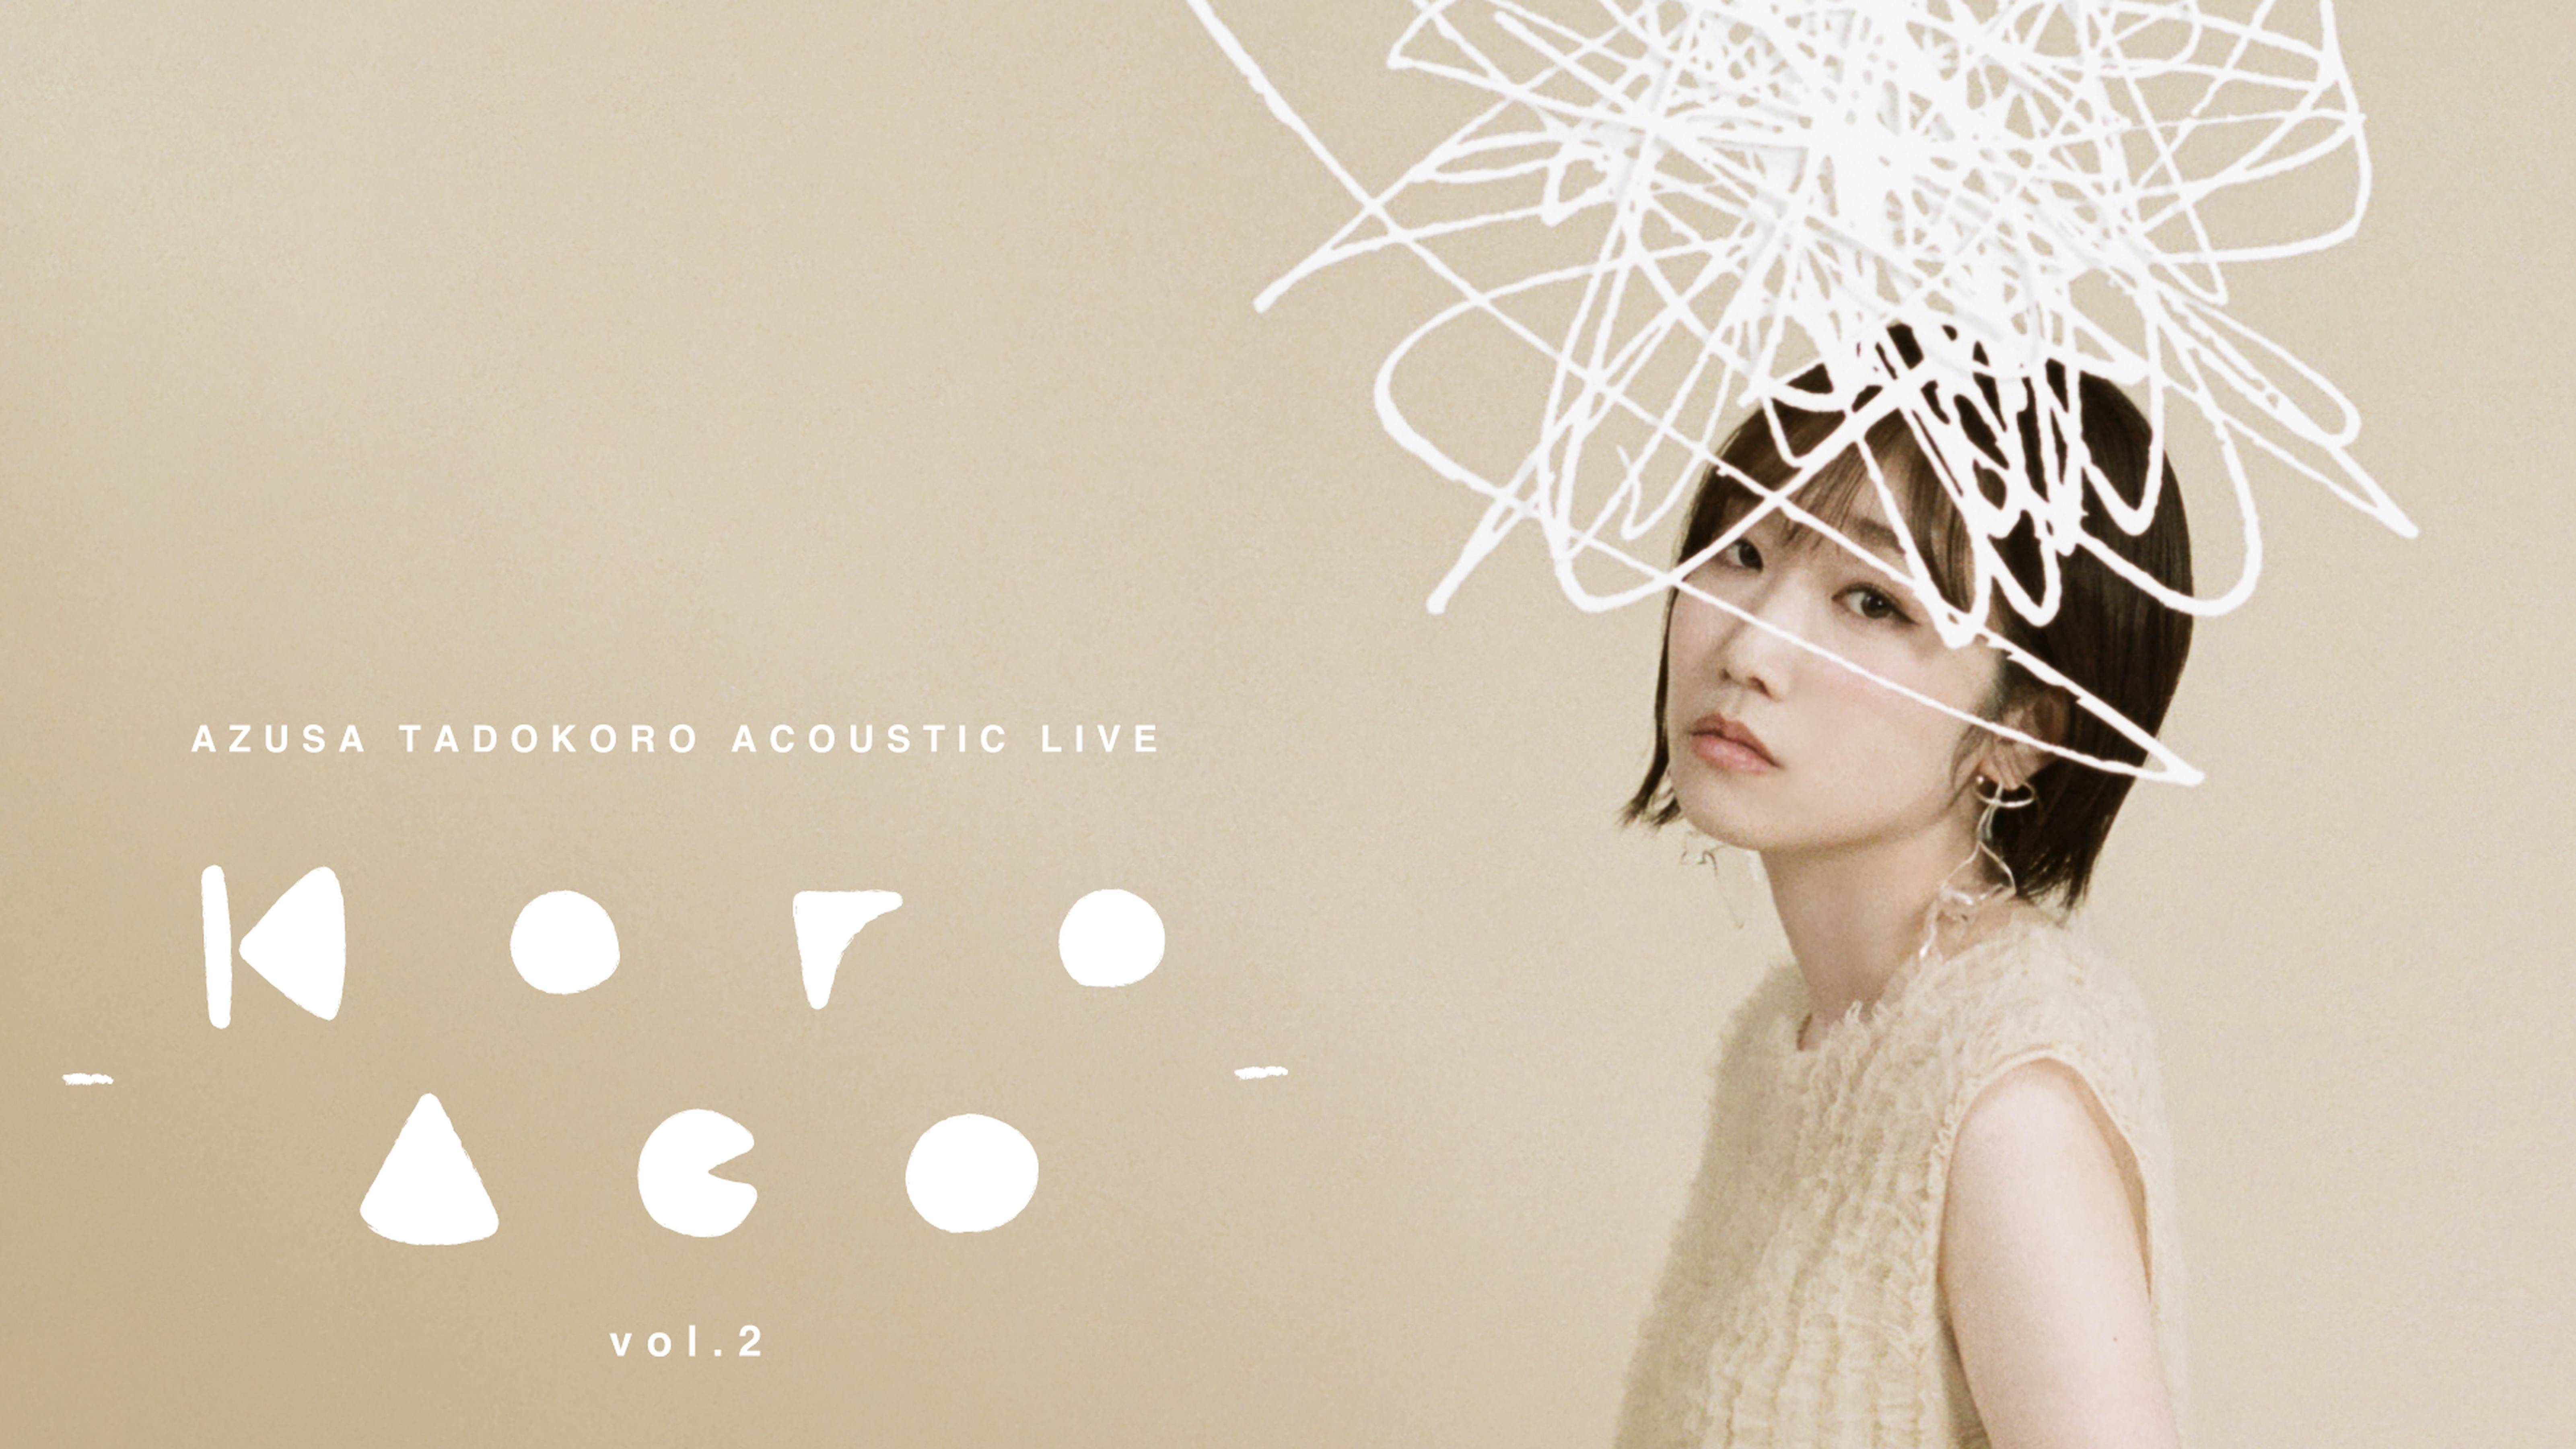 AZUSA TADOKORO ACOUSTIC LIVE -KoroAco- vol.2